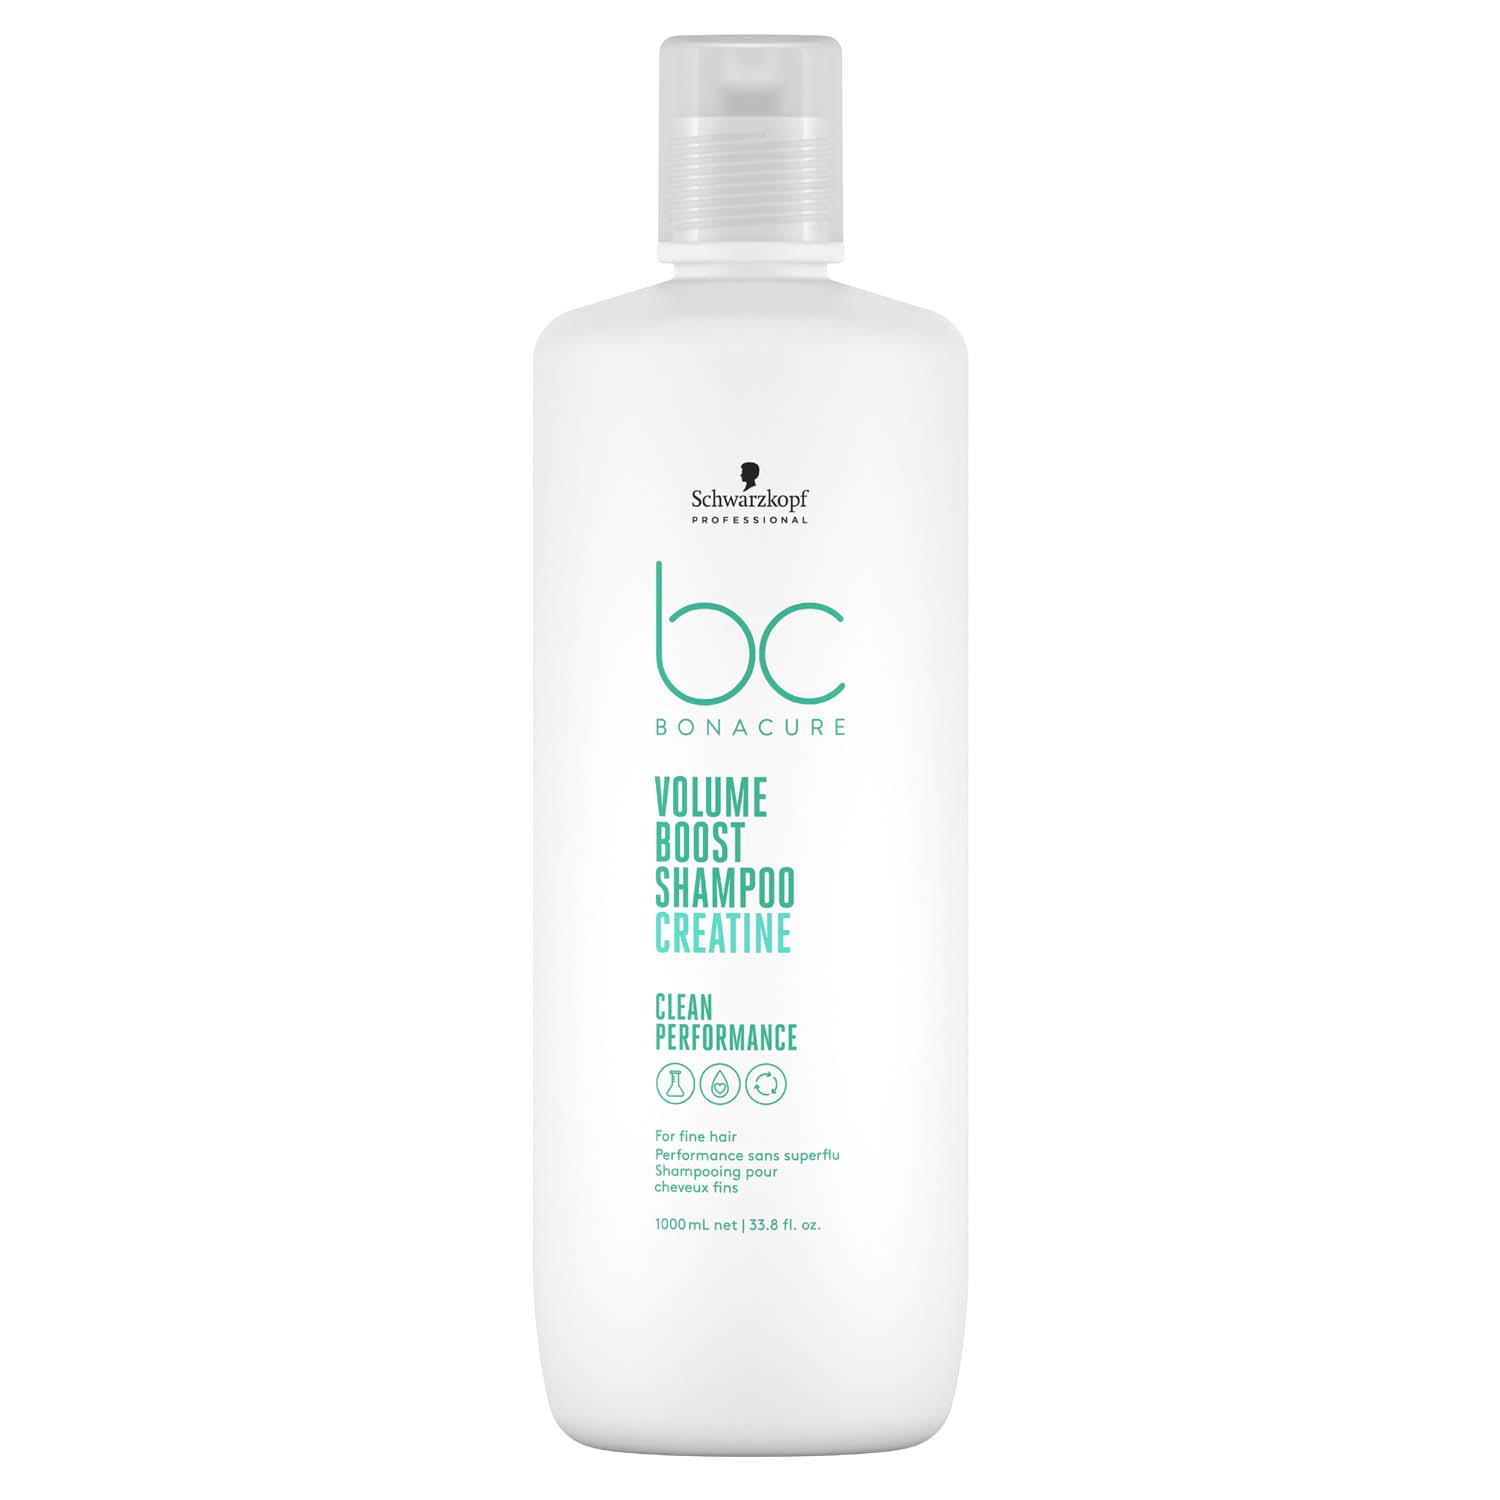 Bona Cure Volume Boost Shampoo